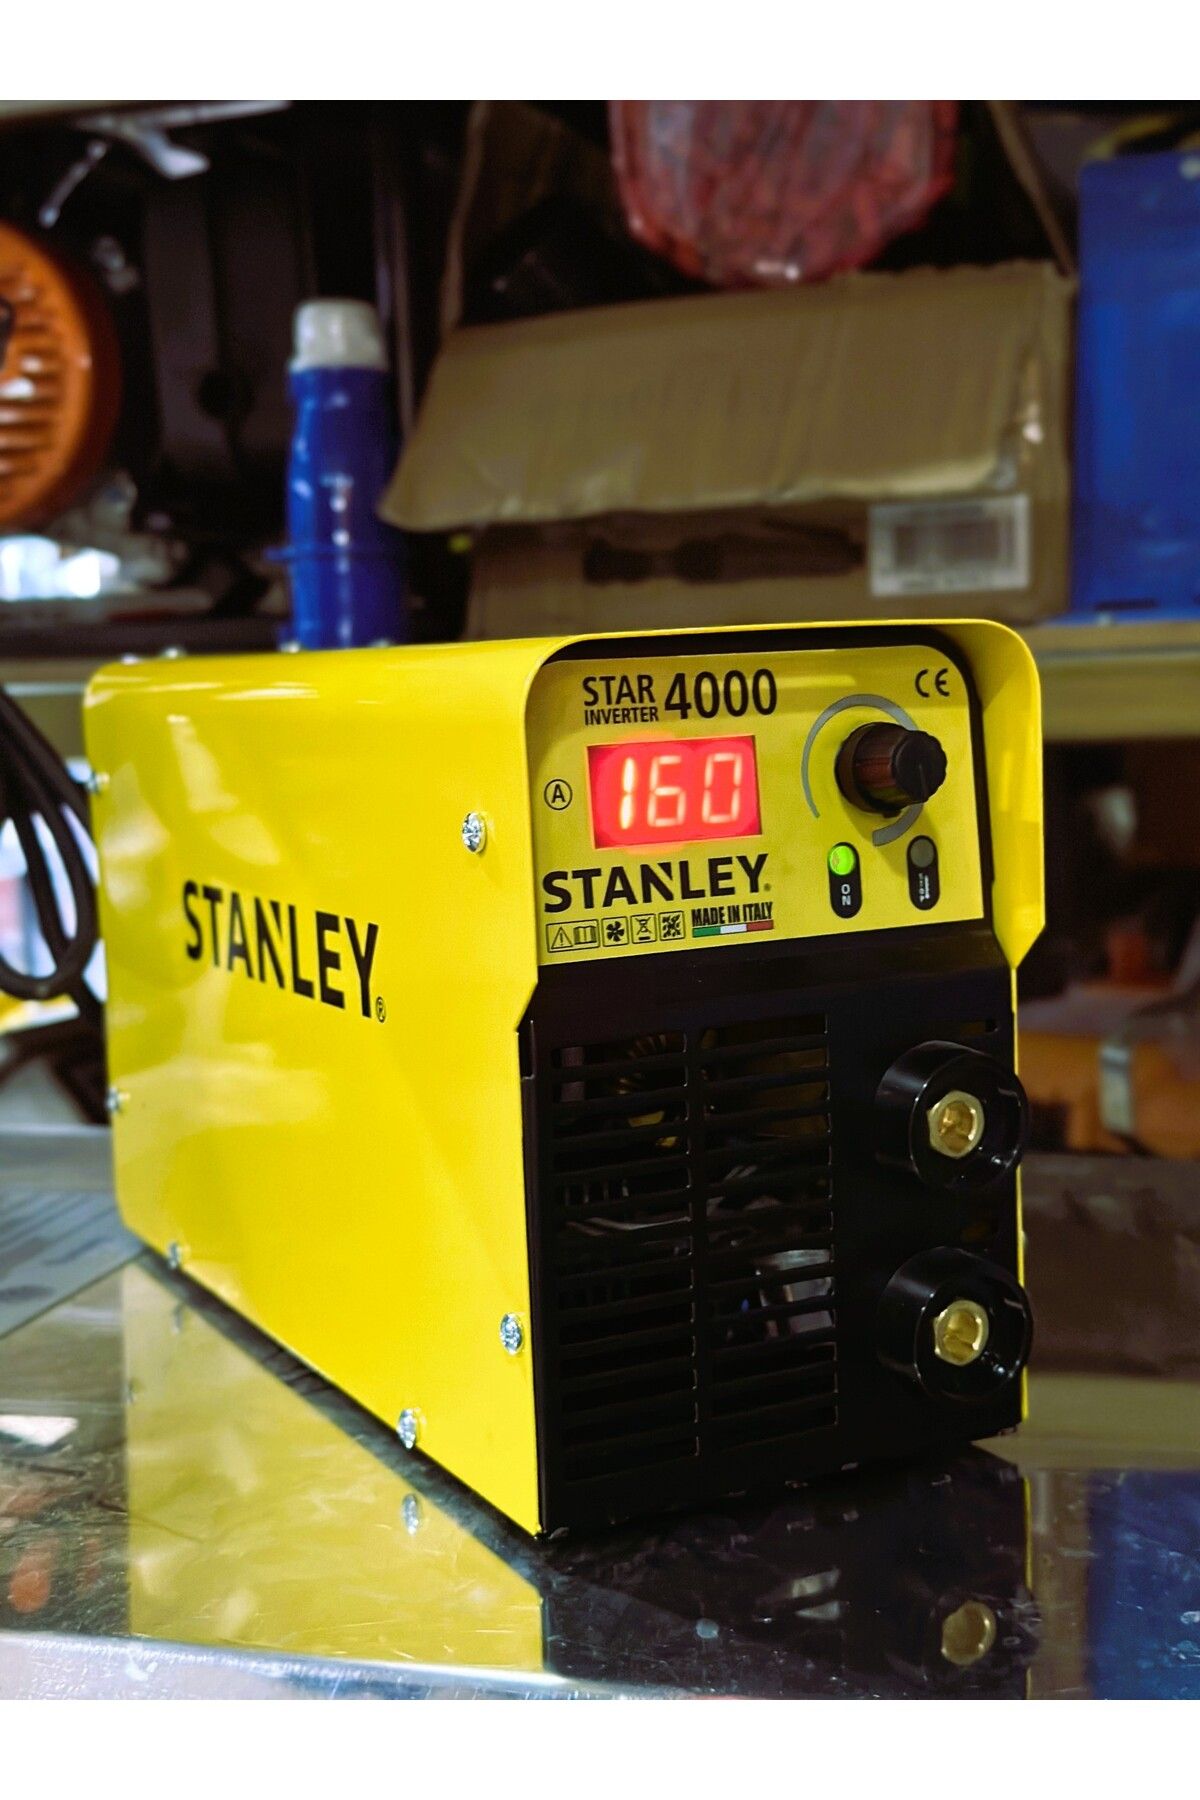 Stanley STAR4000 61411 DİJİTAL AKIM GÖSTERGELİ MMA INVERTER KAYNAK MAKİNASI 160 AMPER MADE İN İTALY